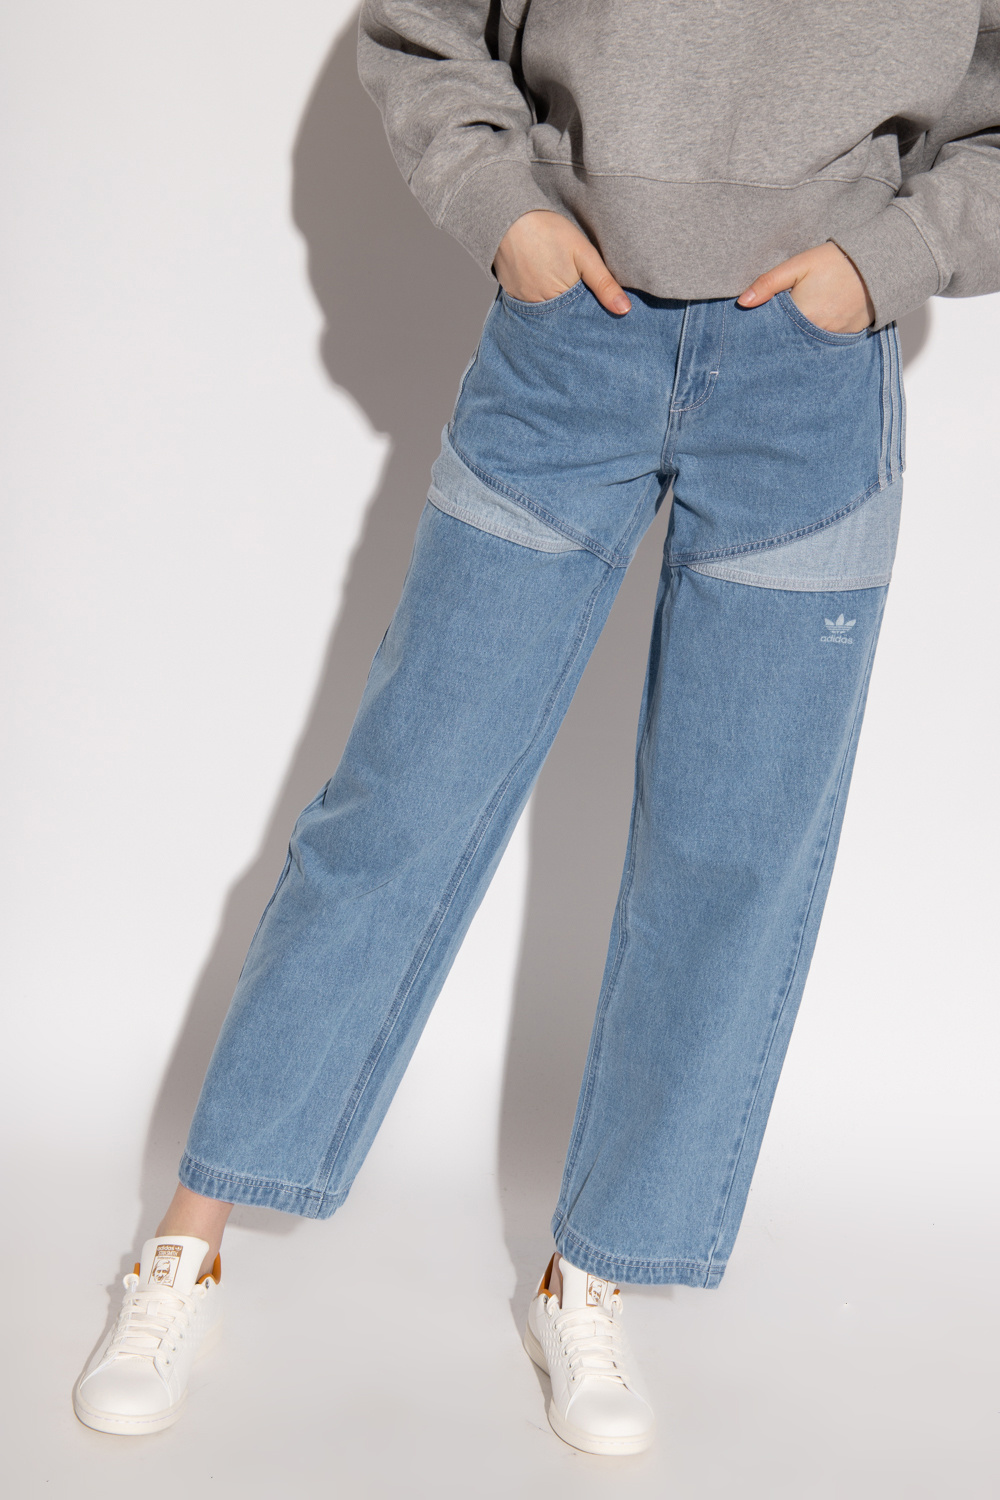 loose the temper strap fatigue ADIDAS Originals Straight jeans | Women's Clothing | Vitkac